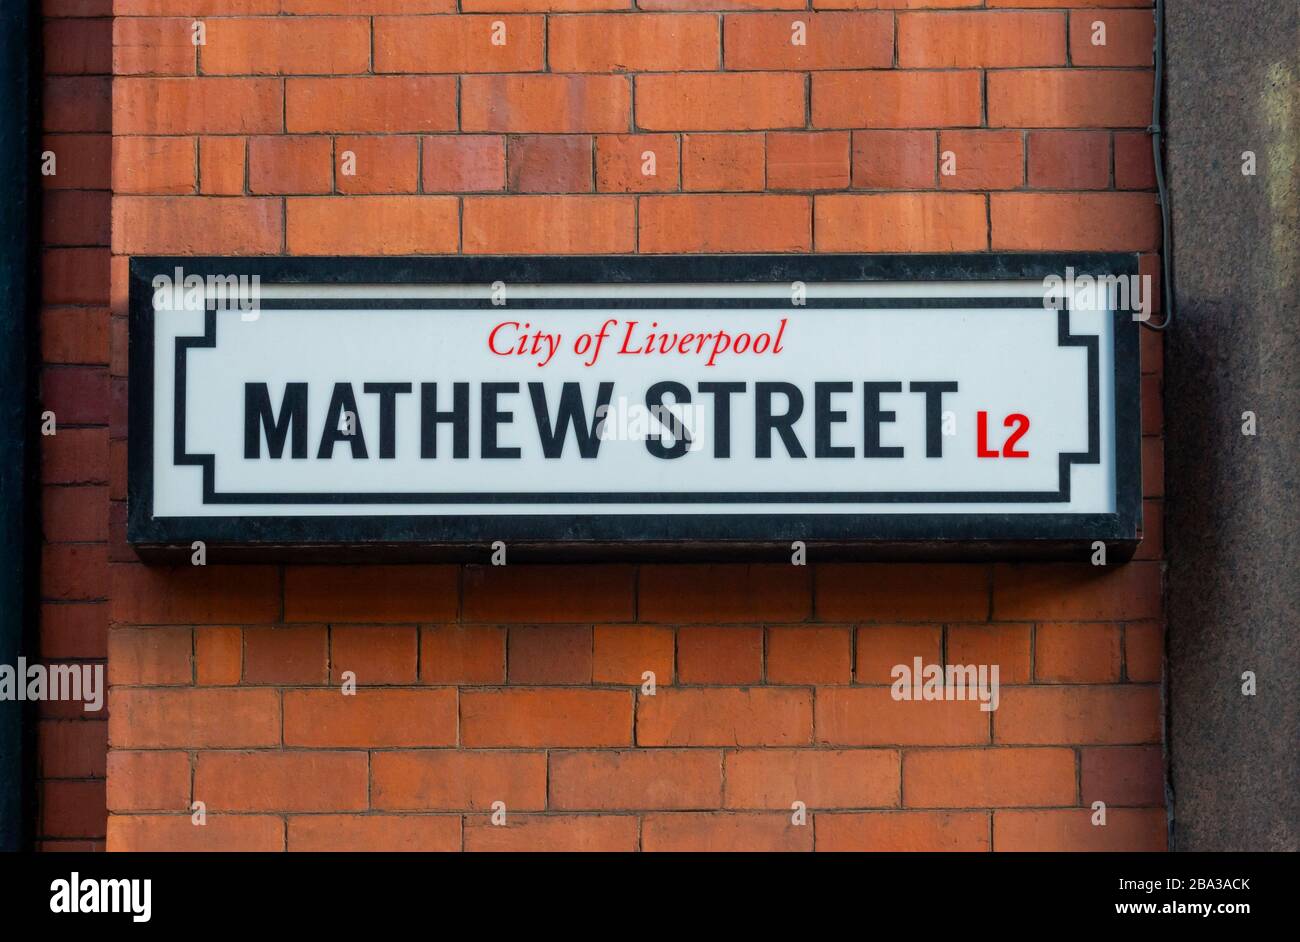 Mathew Street L2 sign in Liverpool Stock Photo